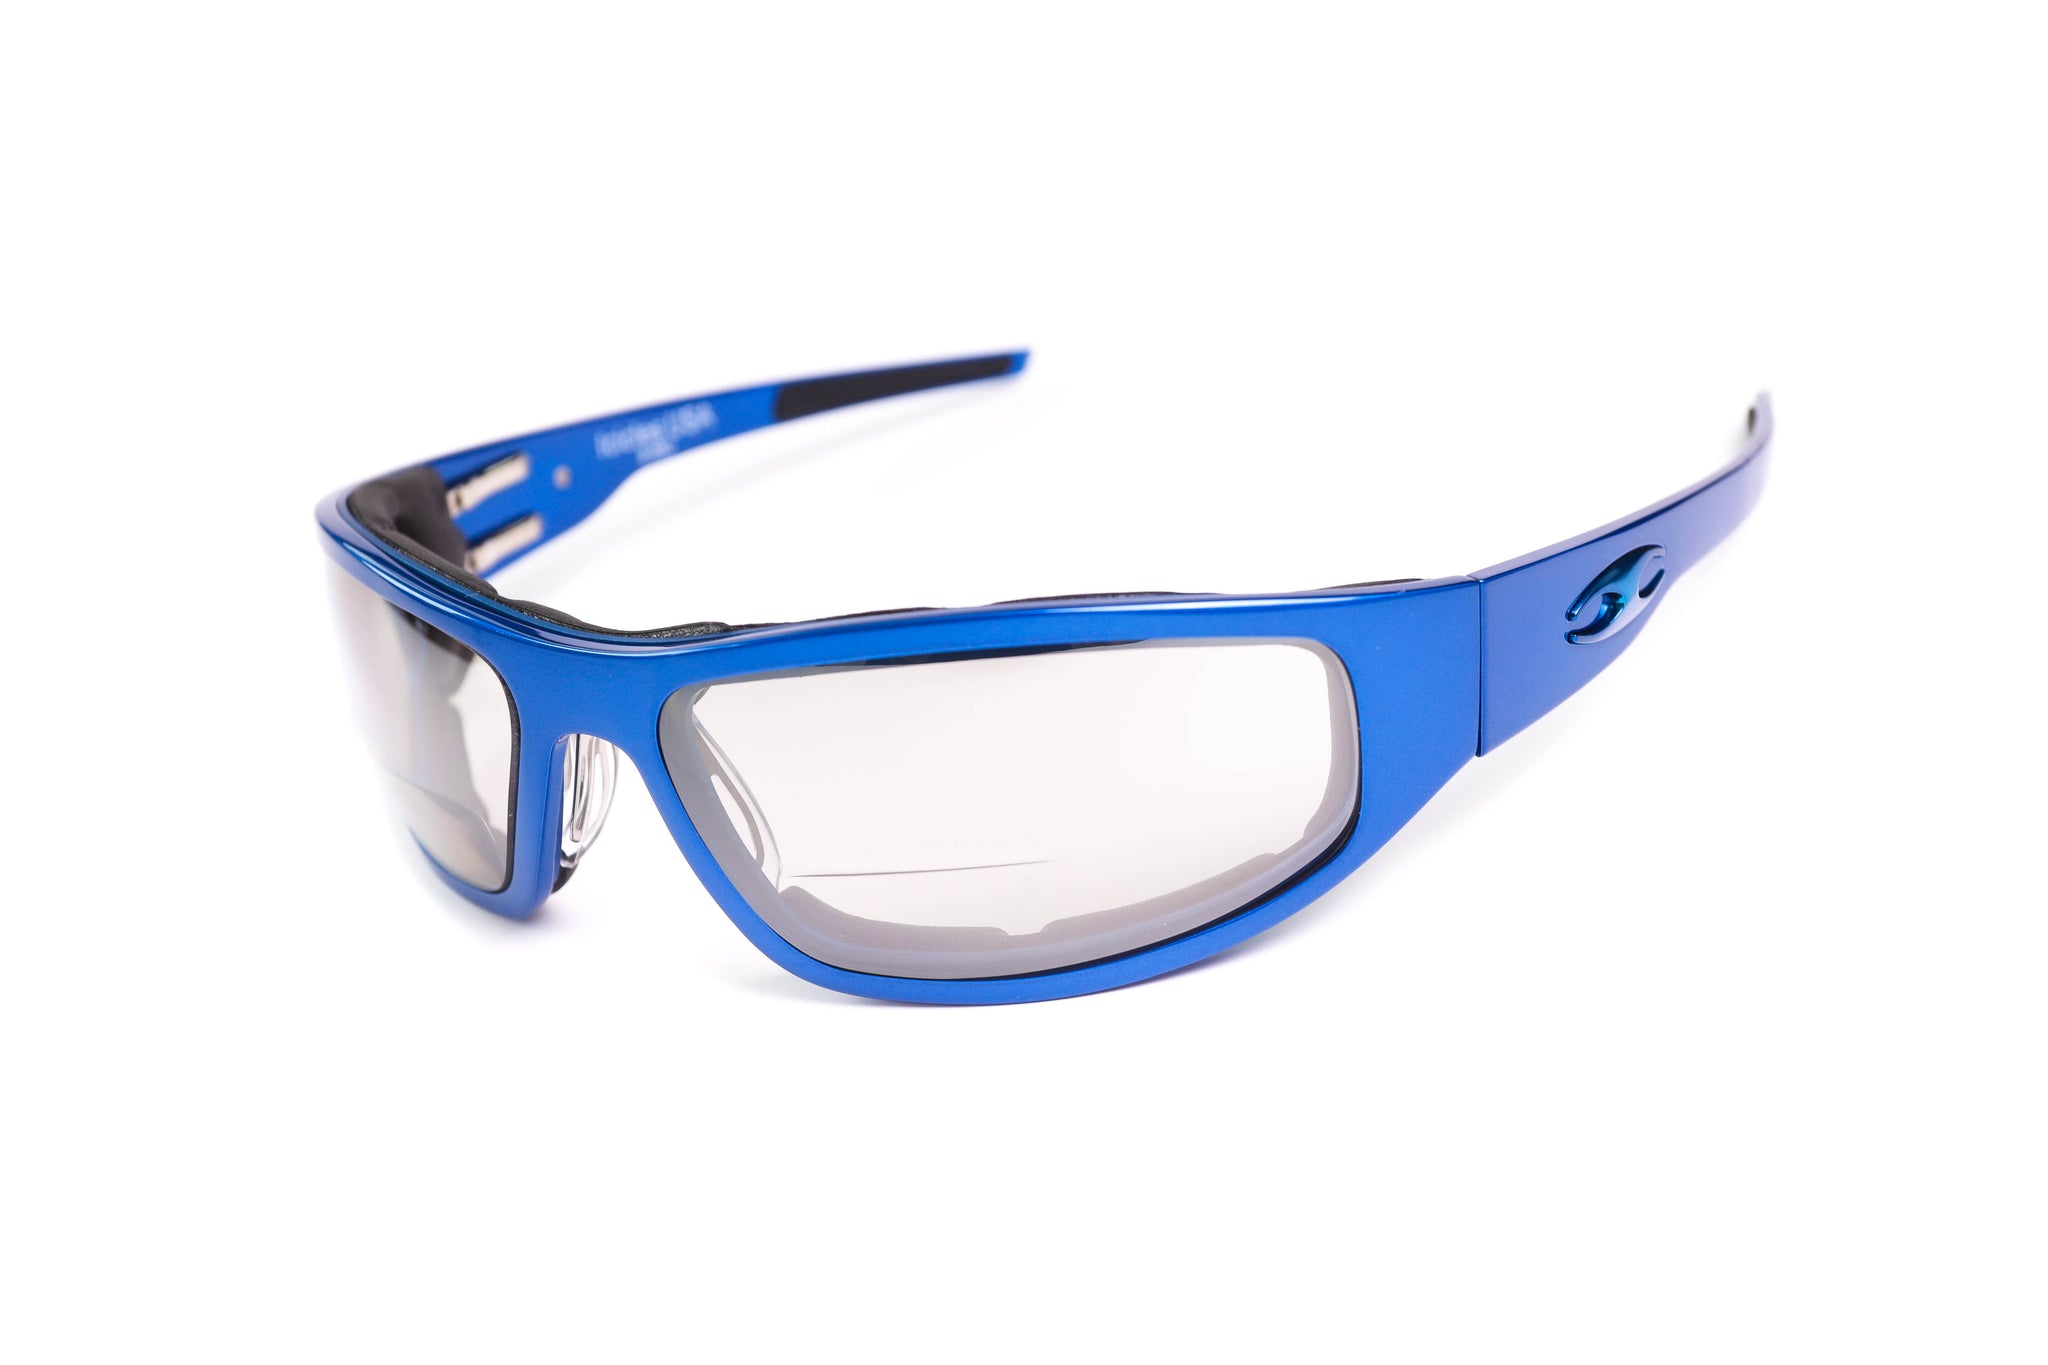 Icicles Eyewear “Bagger” Gunmetal Motorcycle Sunglasses (Smooth) No - Single / Polarized Mirror - Blue / No